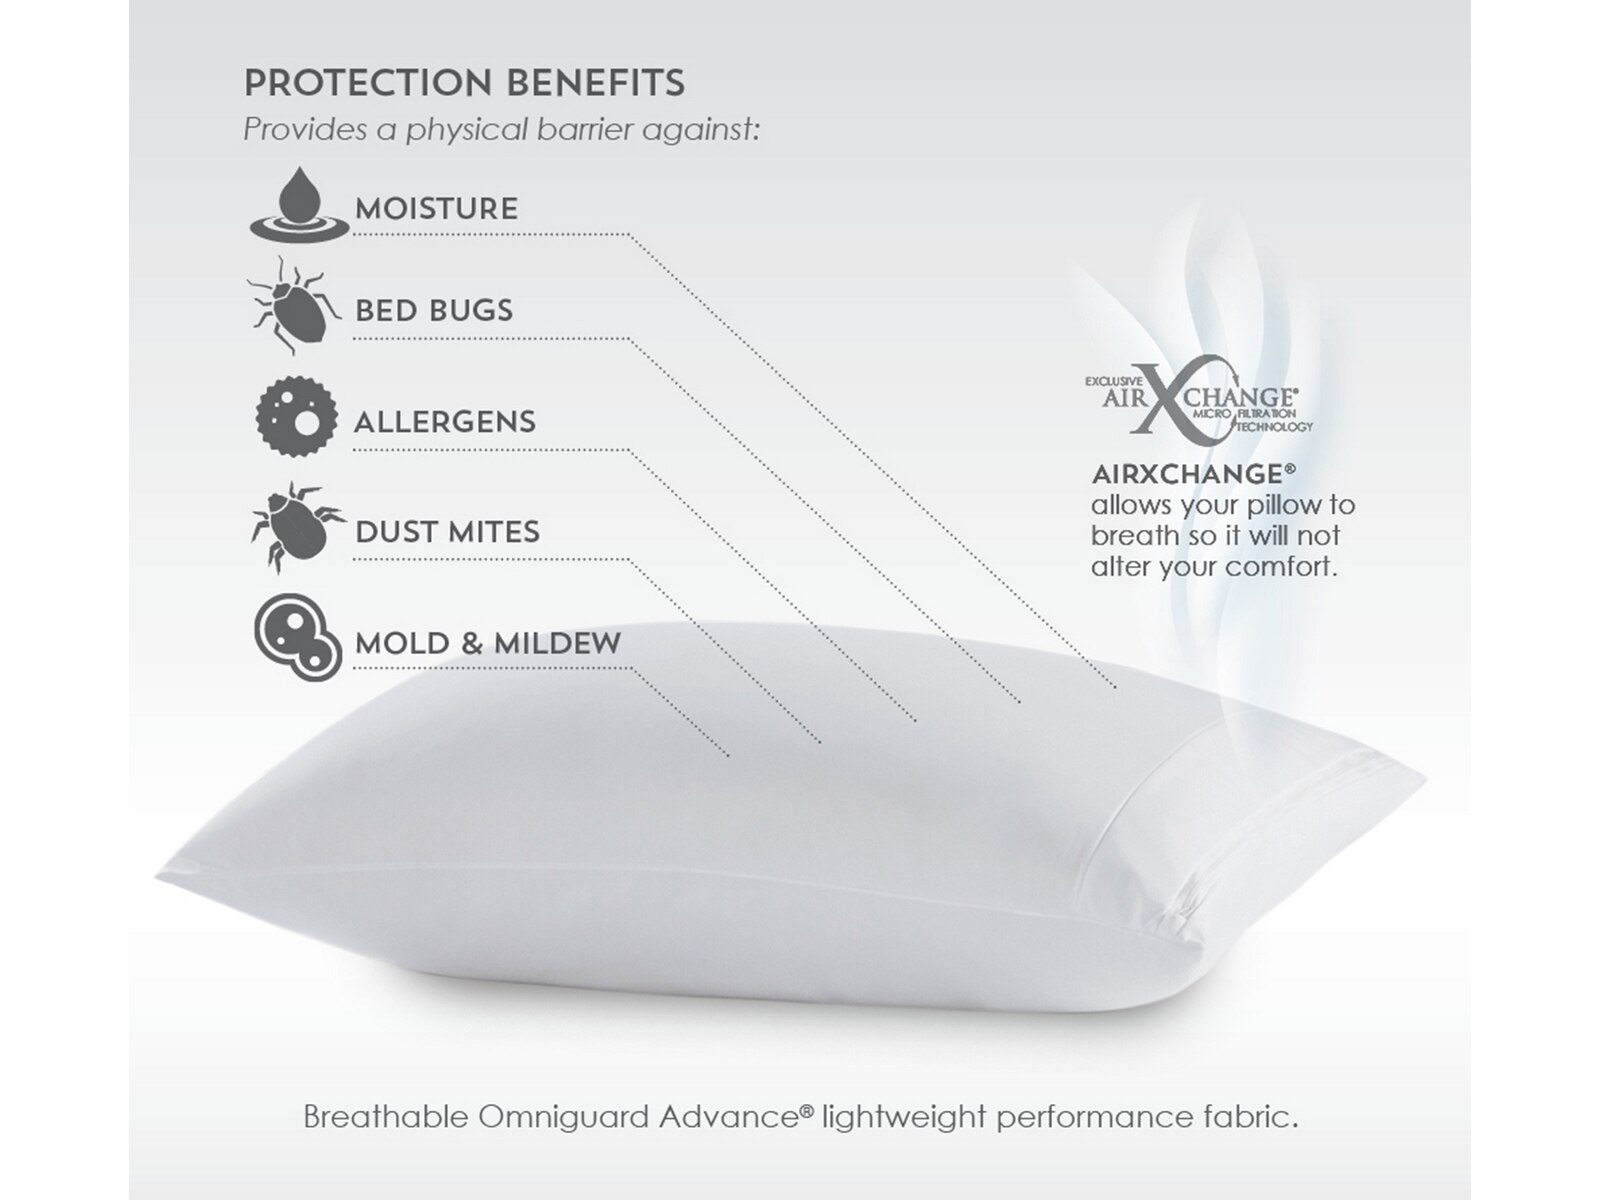 purecare frio mattress protector causes breakout